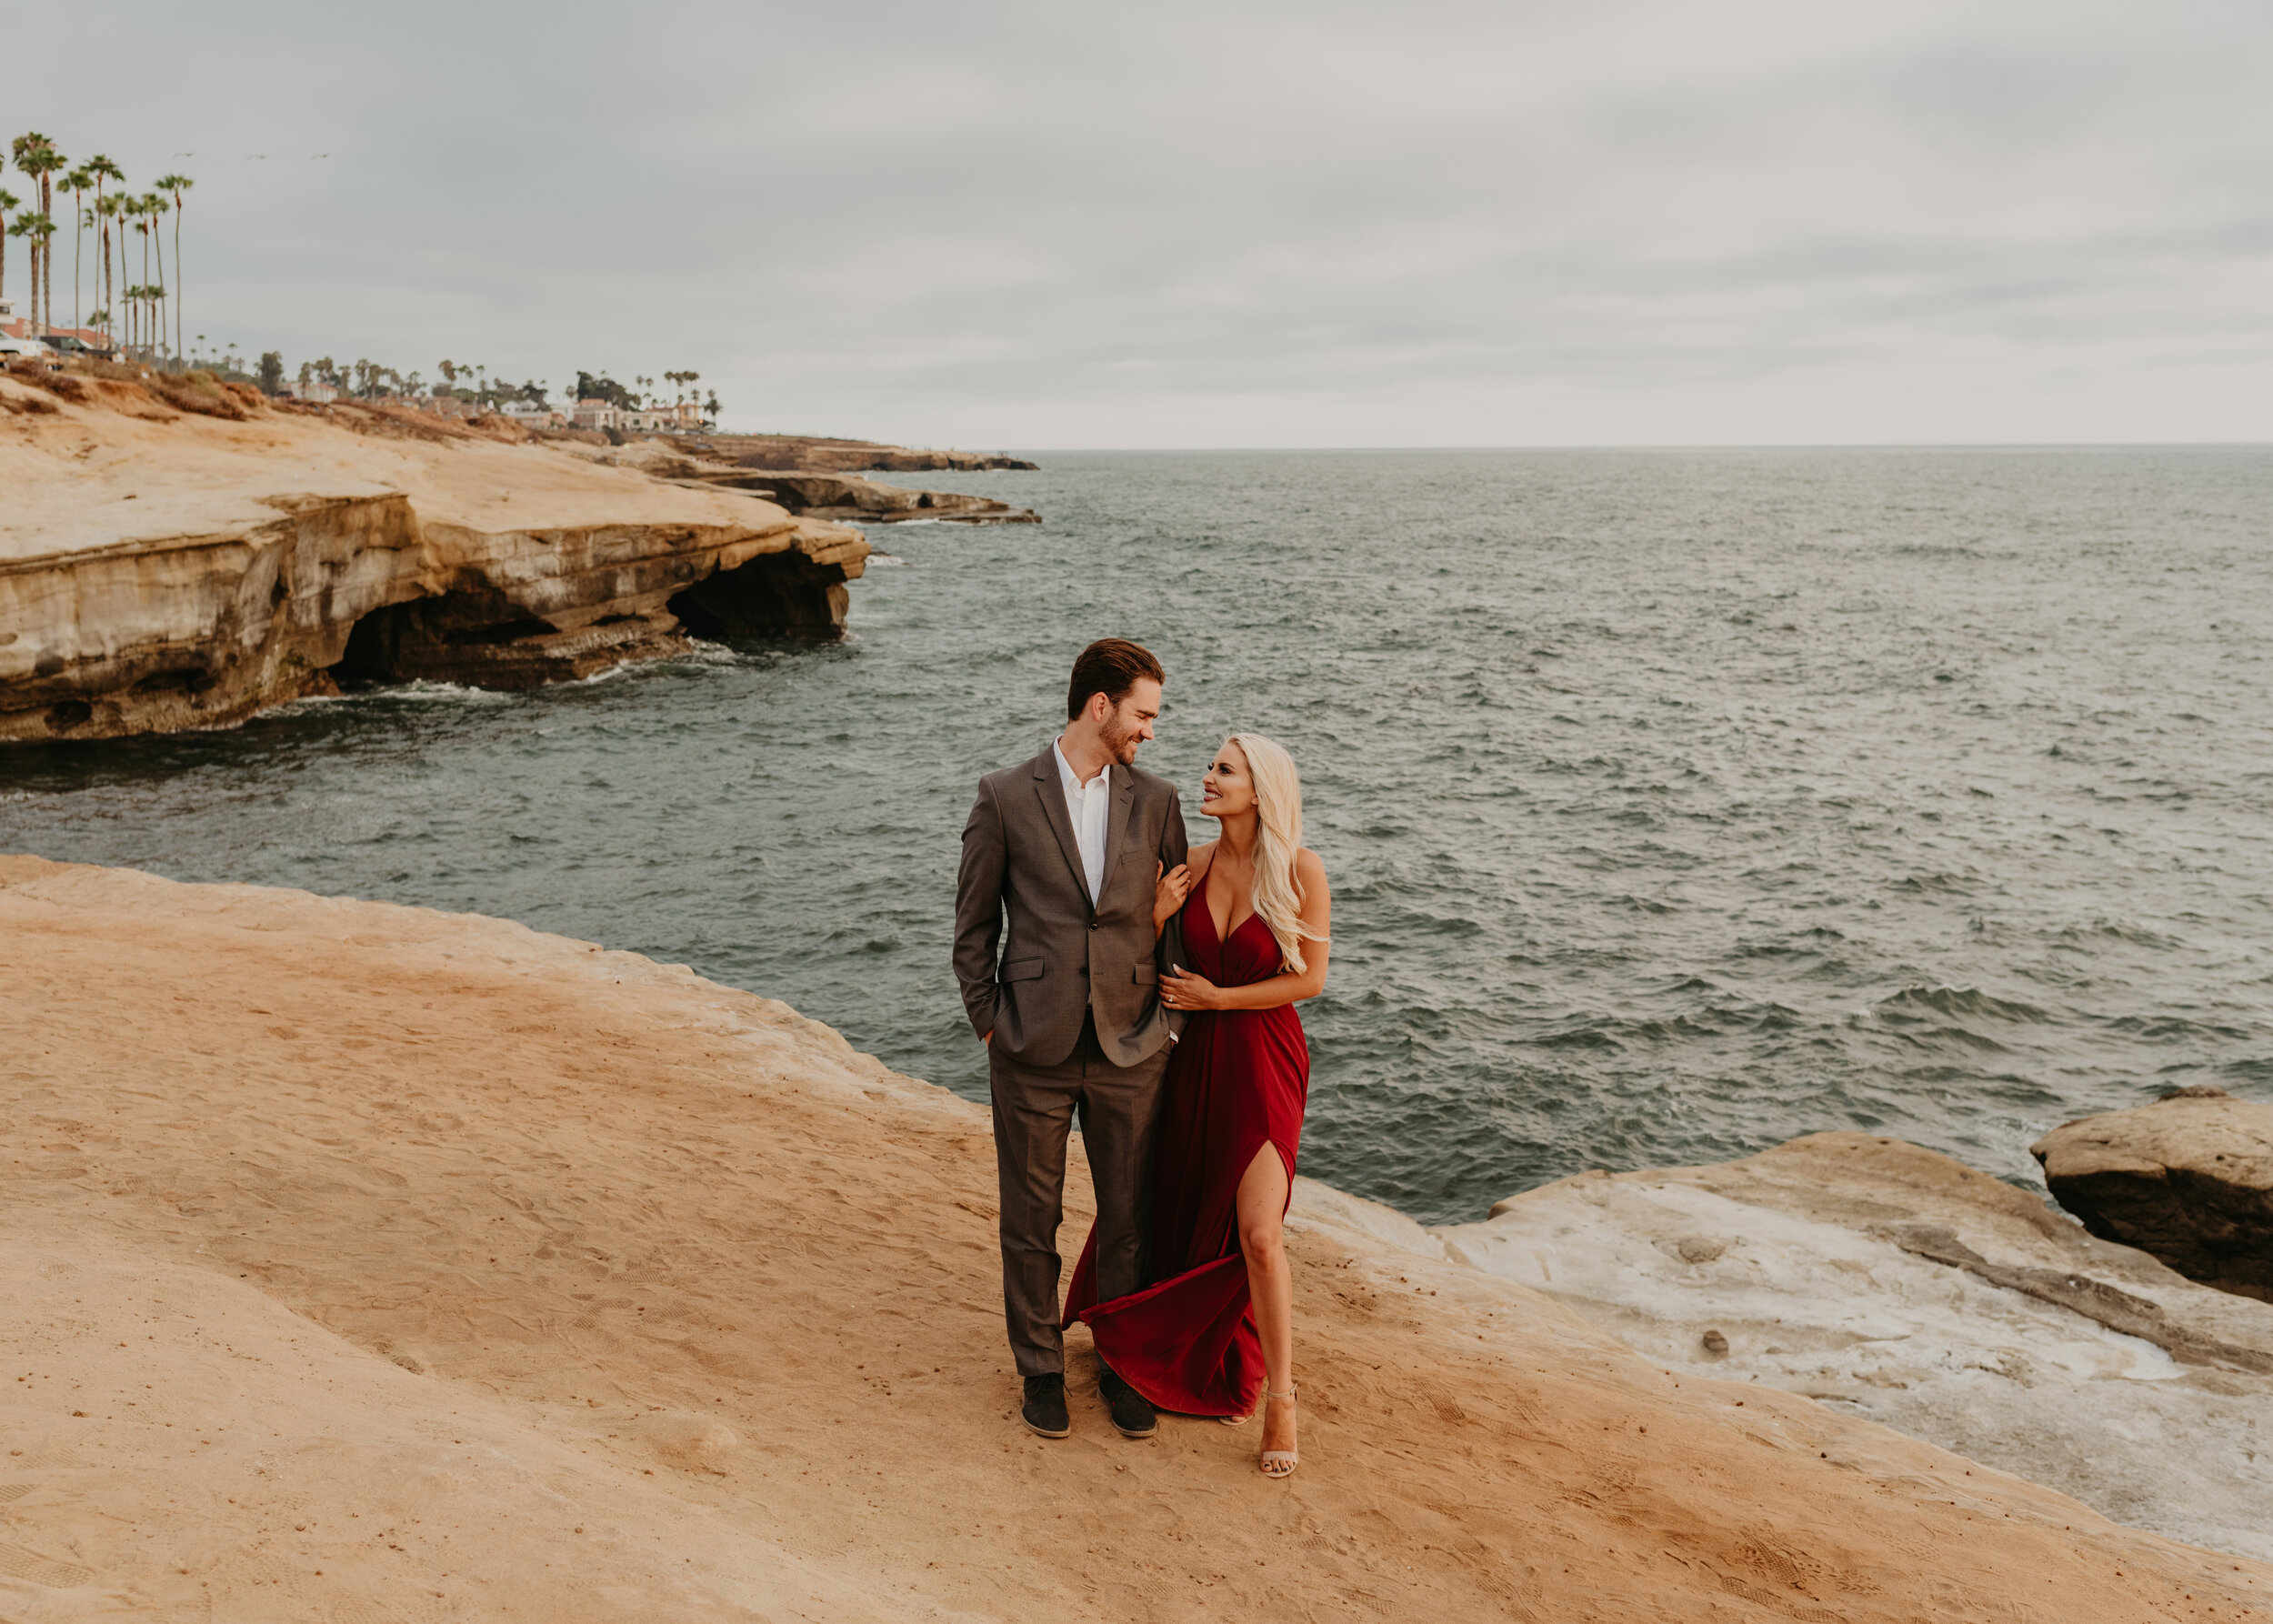 Sunset Cliffs Engagement Session | Couples Photos | San Diego Elopement Photographer | San Diego Engagement | California Beach Cliffs